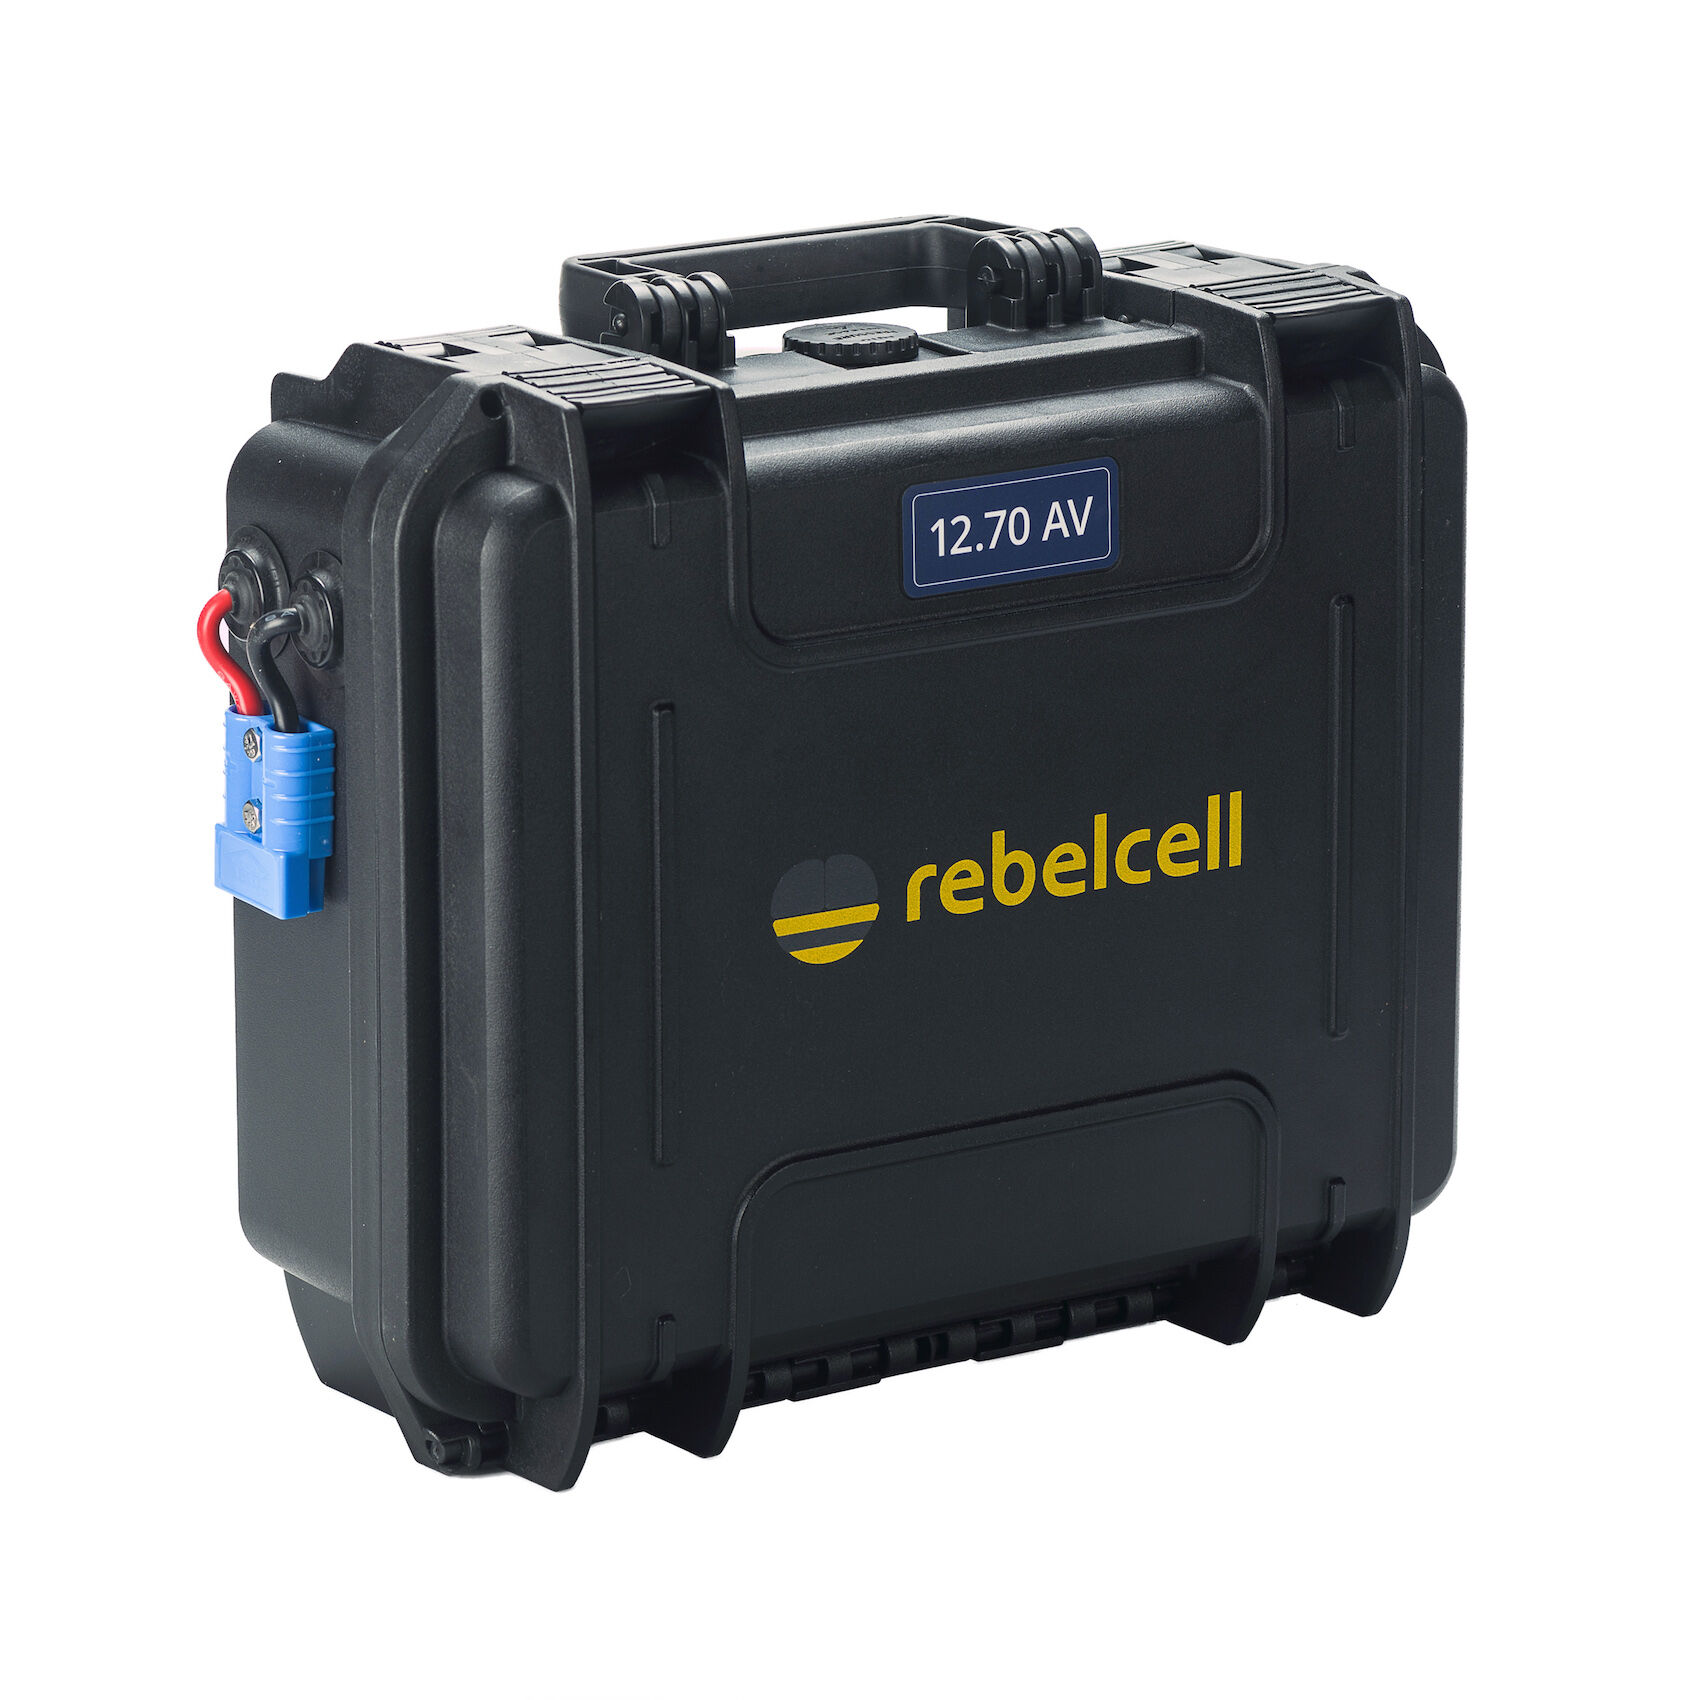 RebelCell Outdoorbox 12.70 AV Koffer mit 12V 70Ah Lithium Batterie (836Wh)